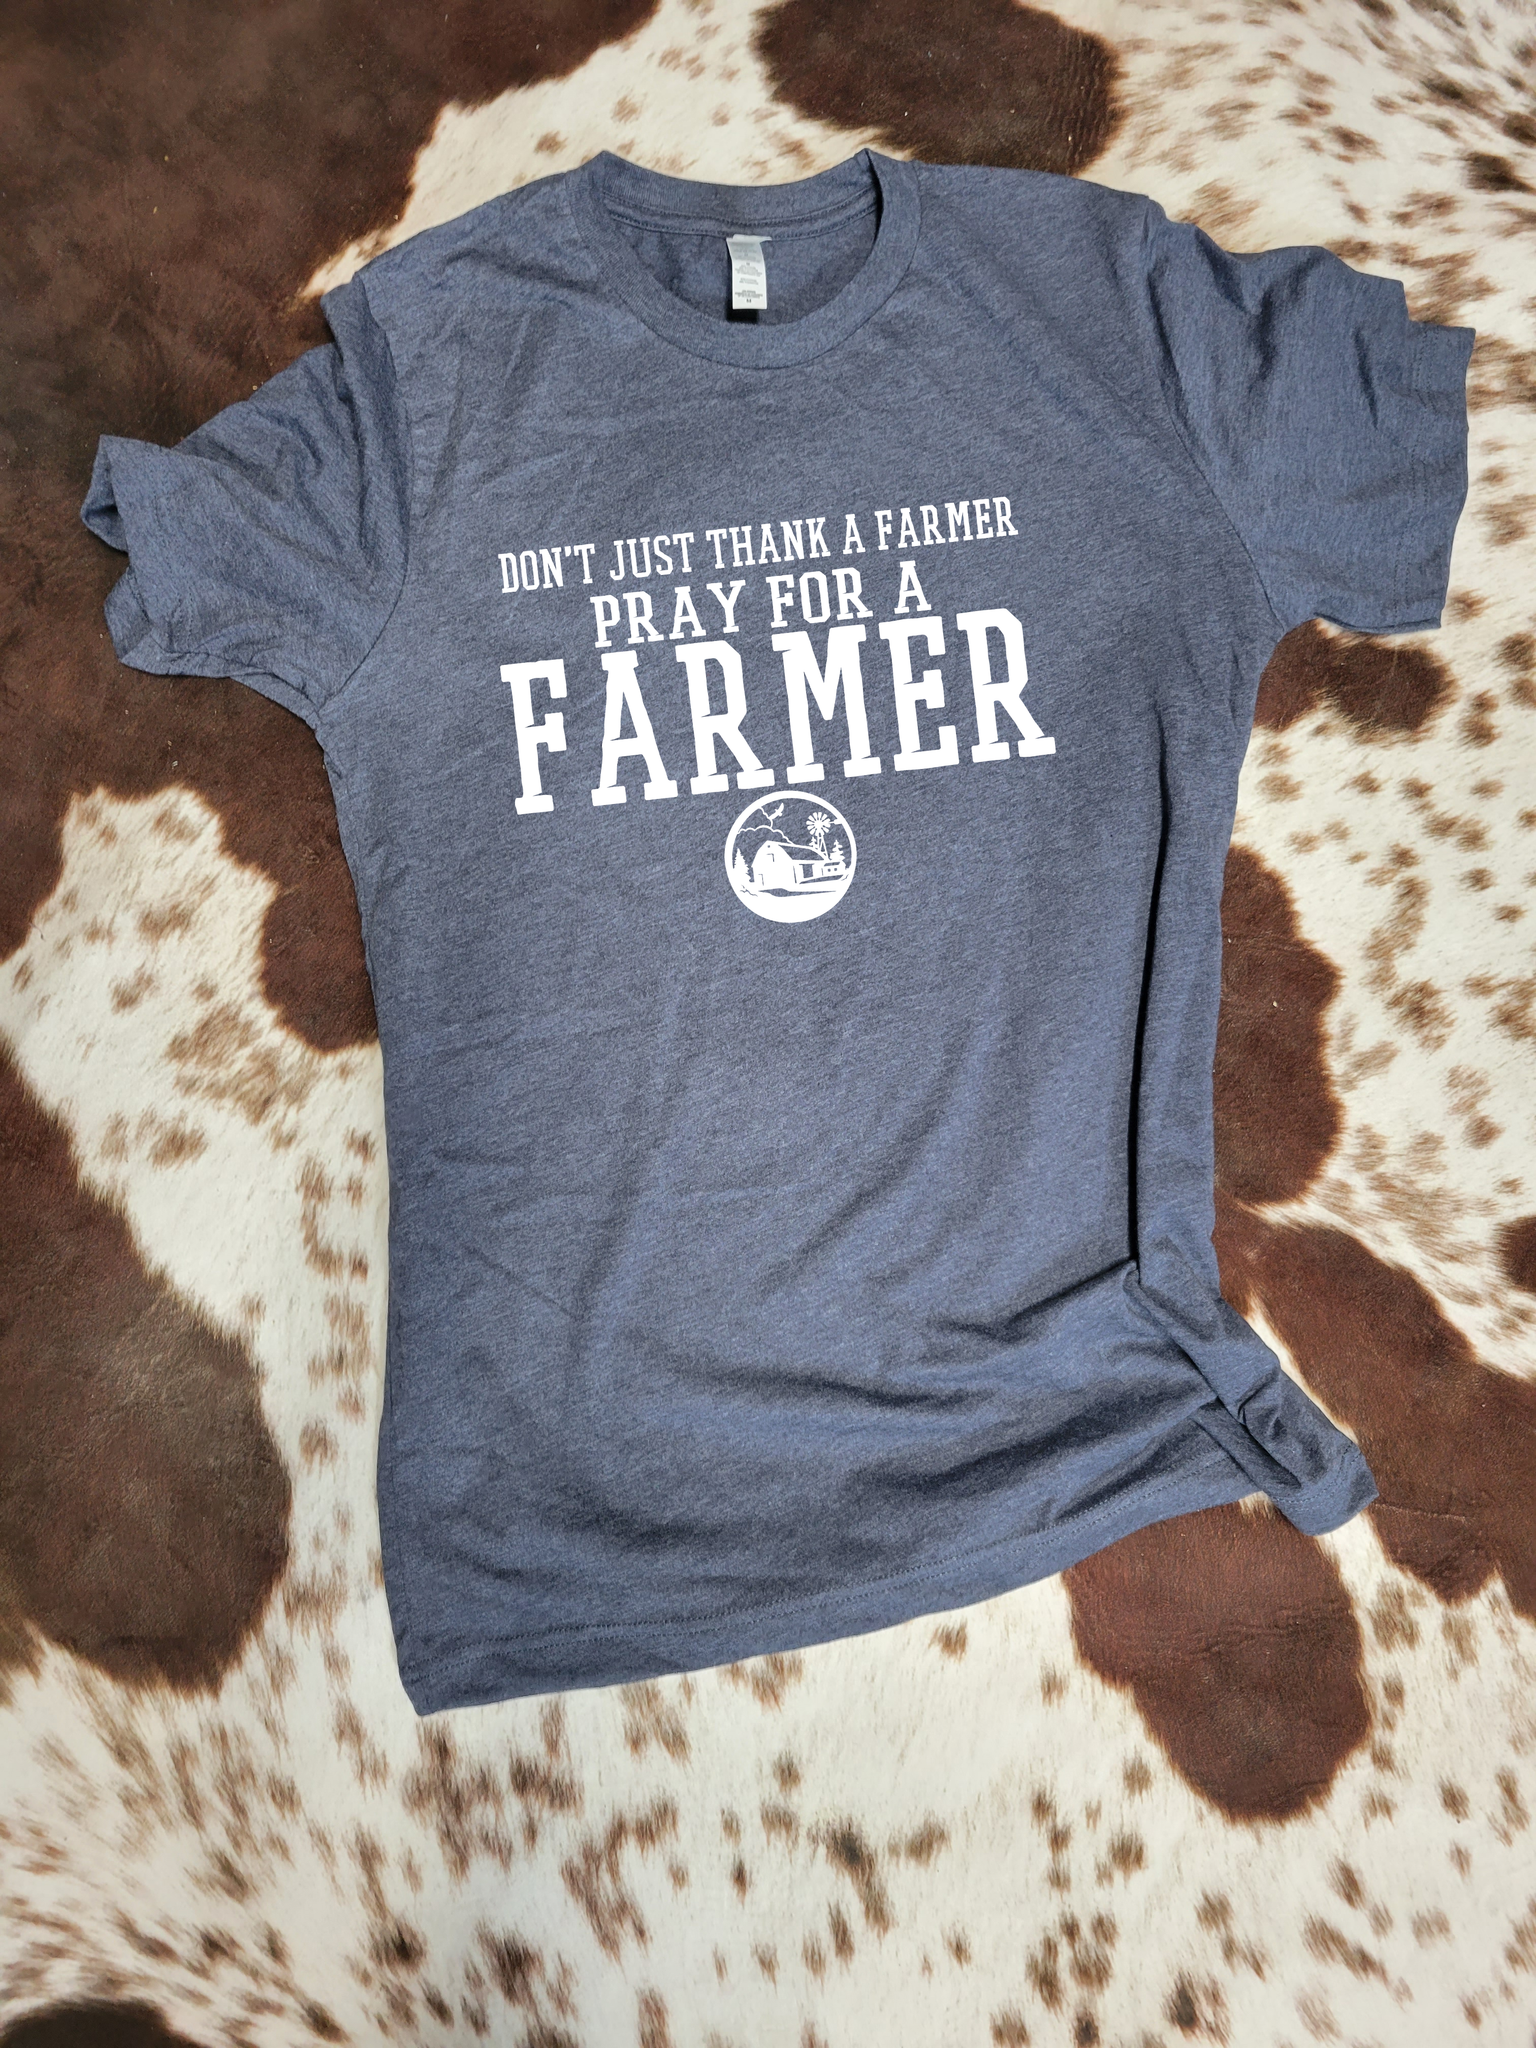 Don't just thank a farmer Pray for a Farmer